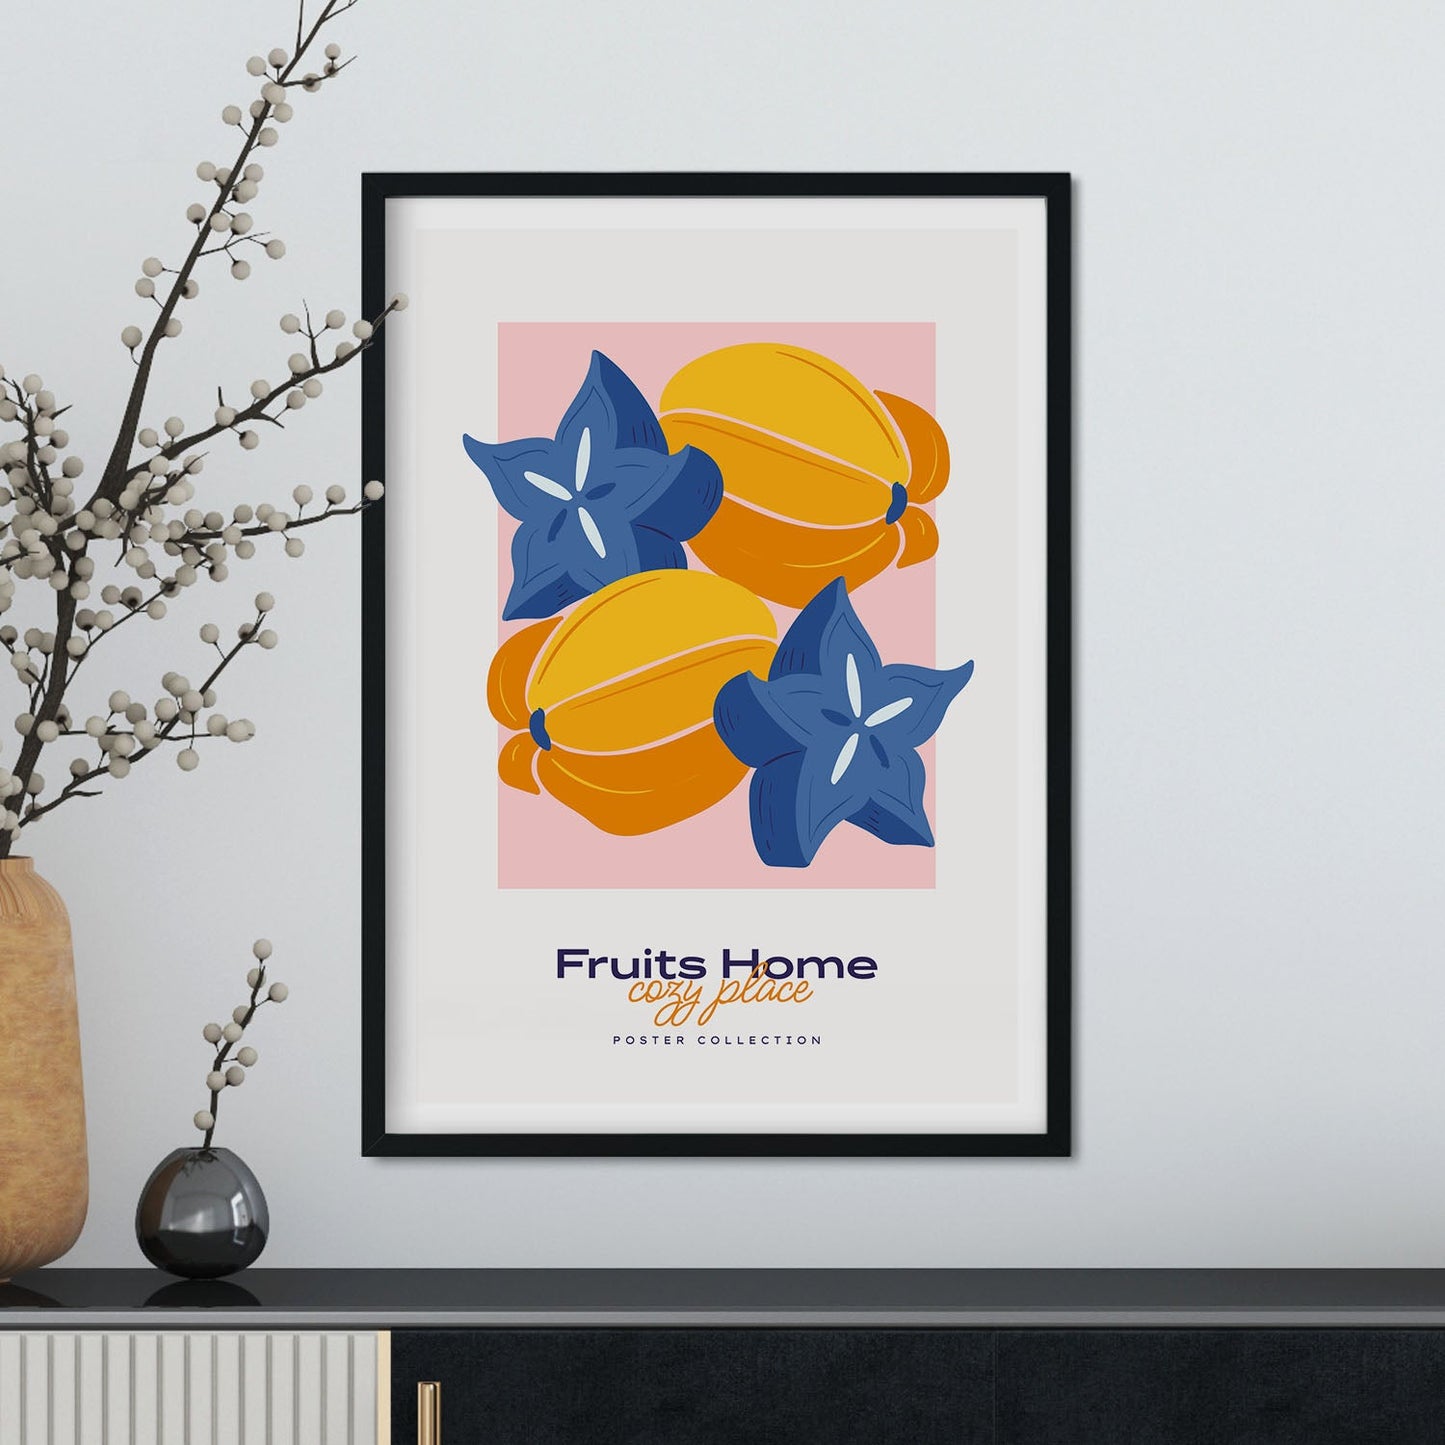 Star Fruit Cozy Place-Artwork-Nacnic-Nacnic Estudio SL